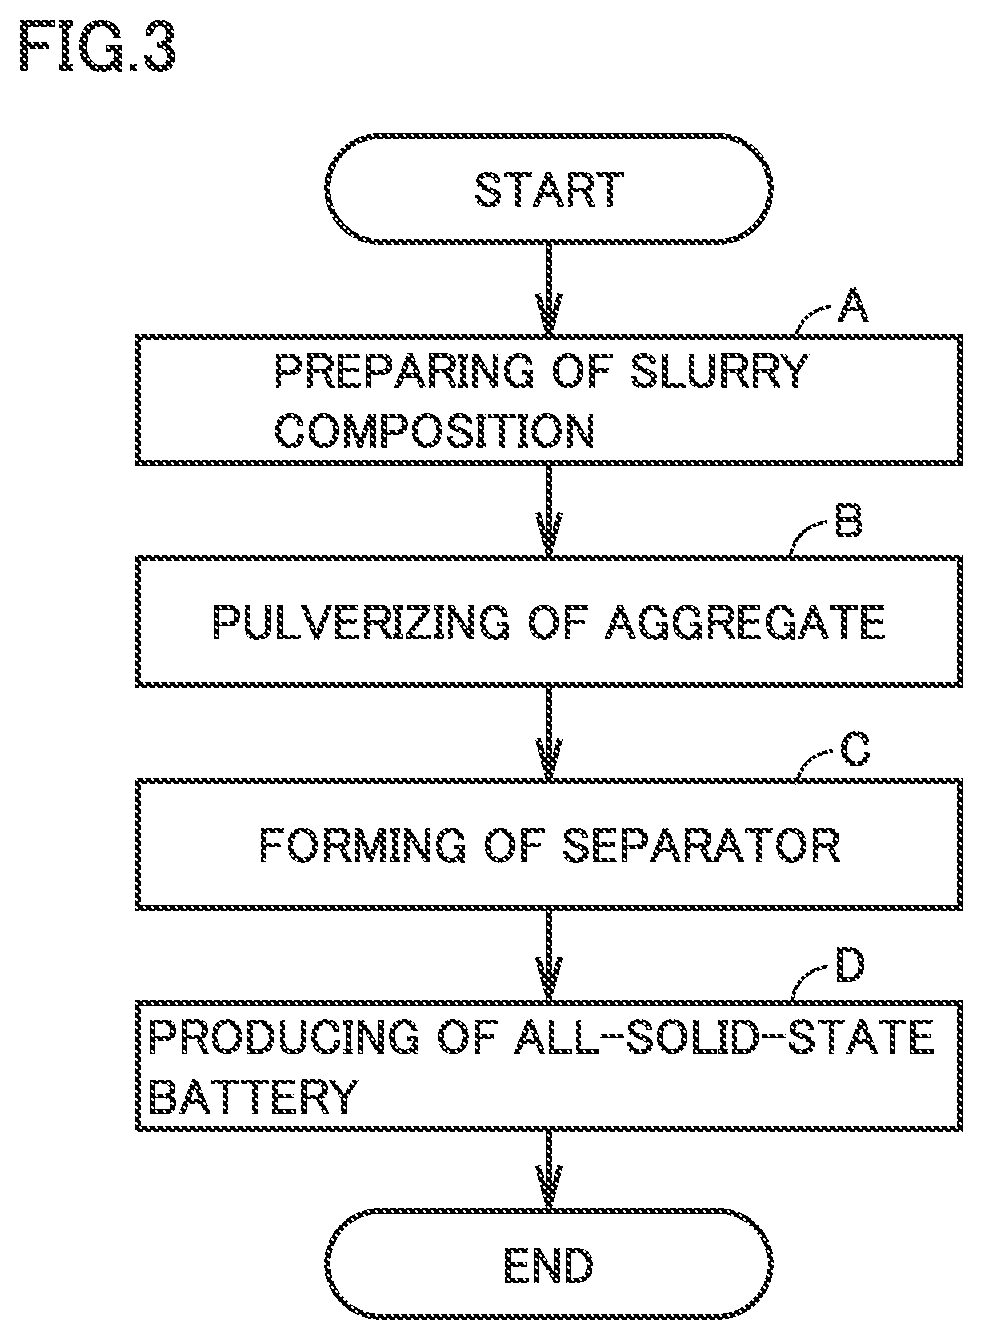 Binder composition, method of producing binder composition, and method of producing all-solid-state battery